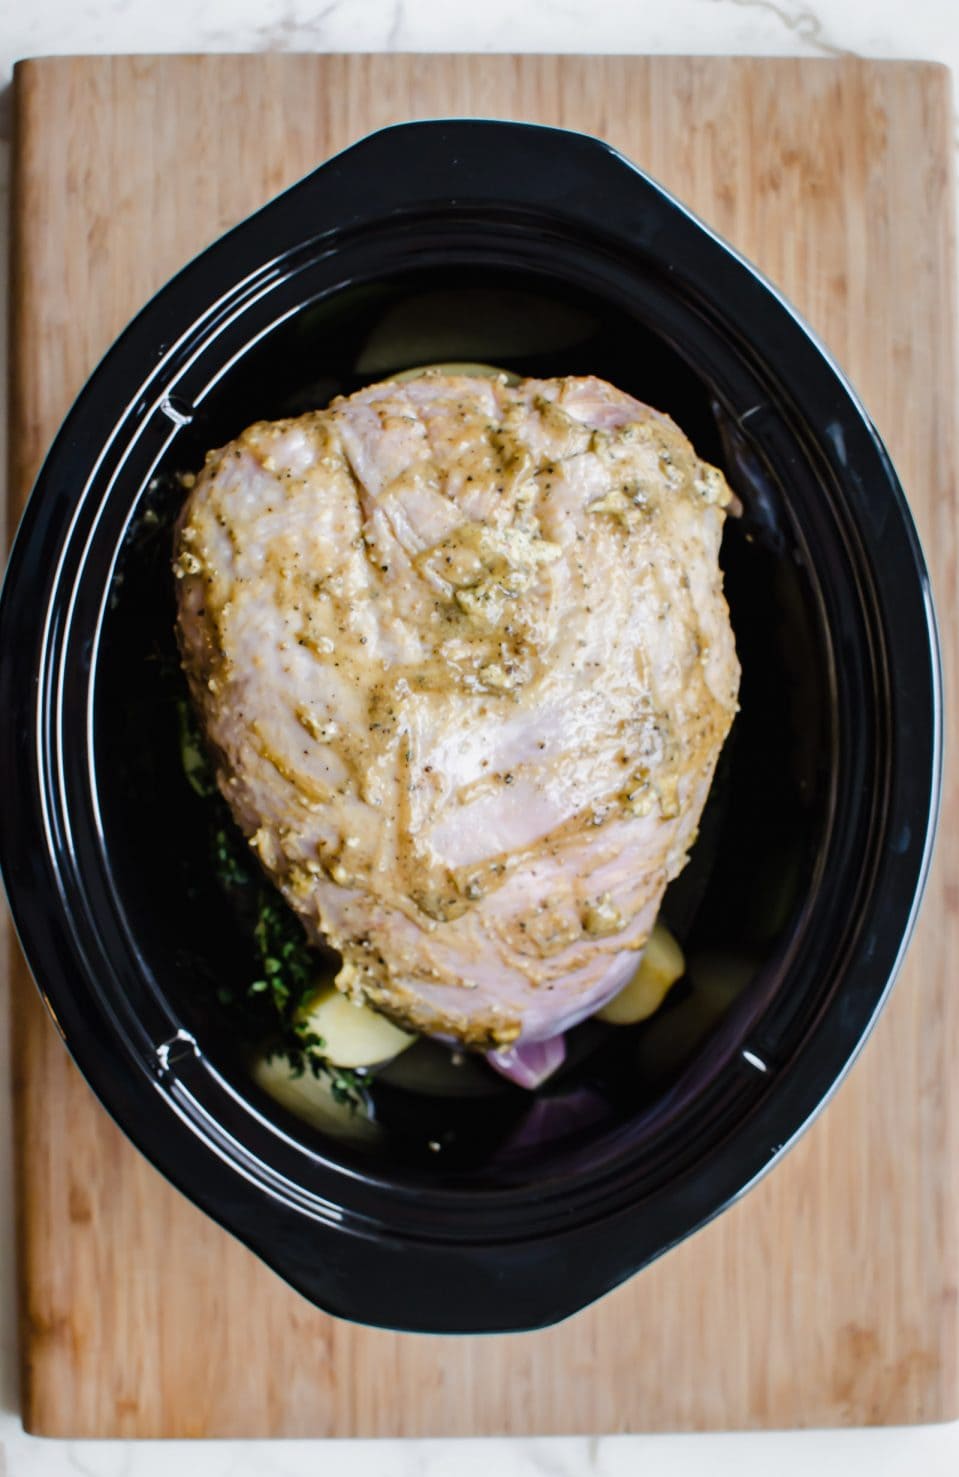 A raw, rubbed turkey breast inside a black slow cooker. 